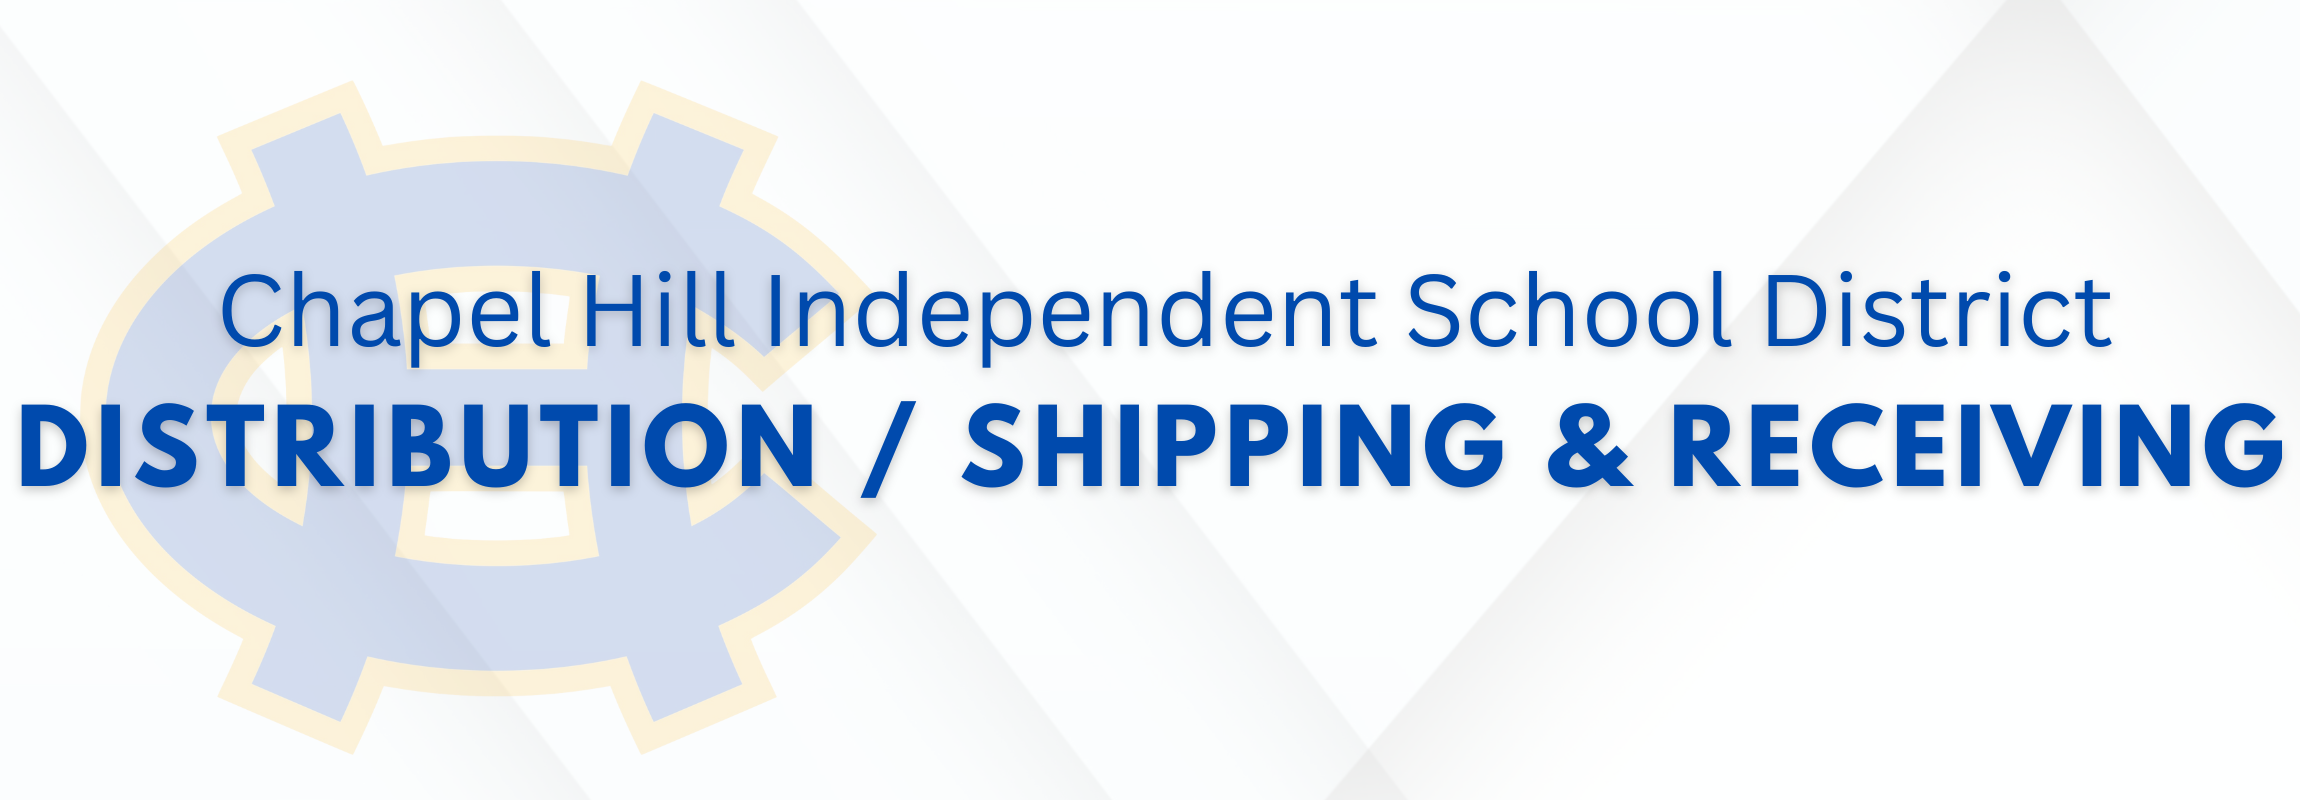 Distribution / Shipping & Receiving Logo